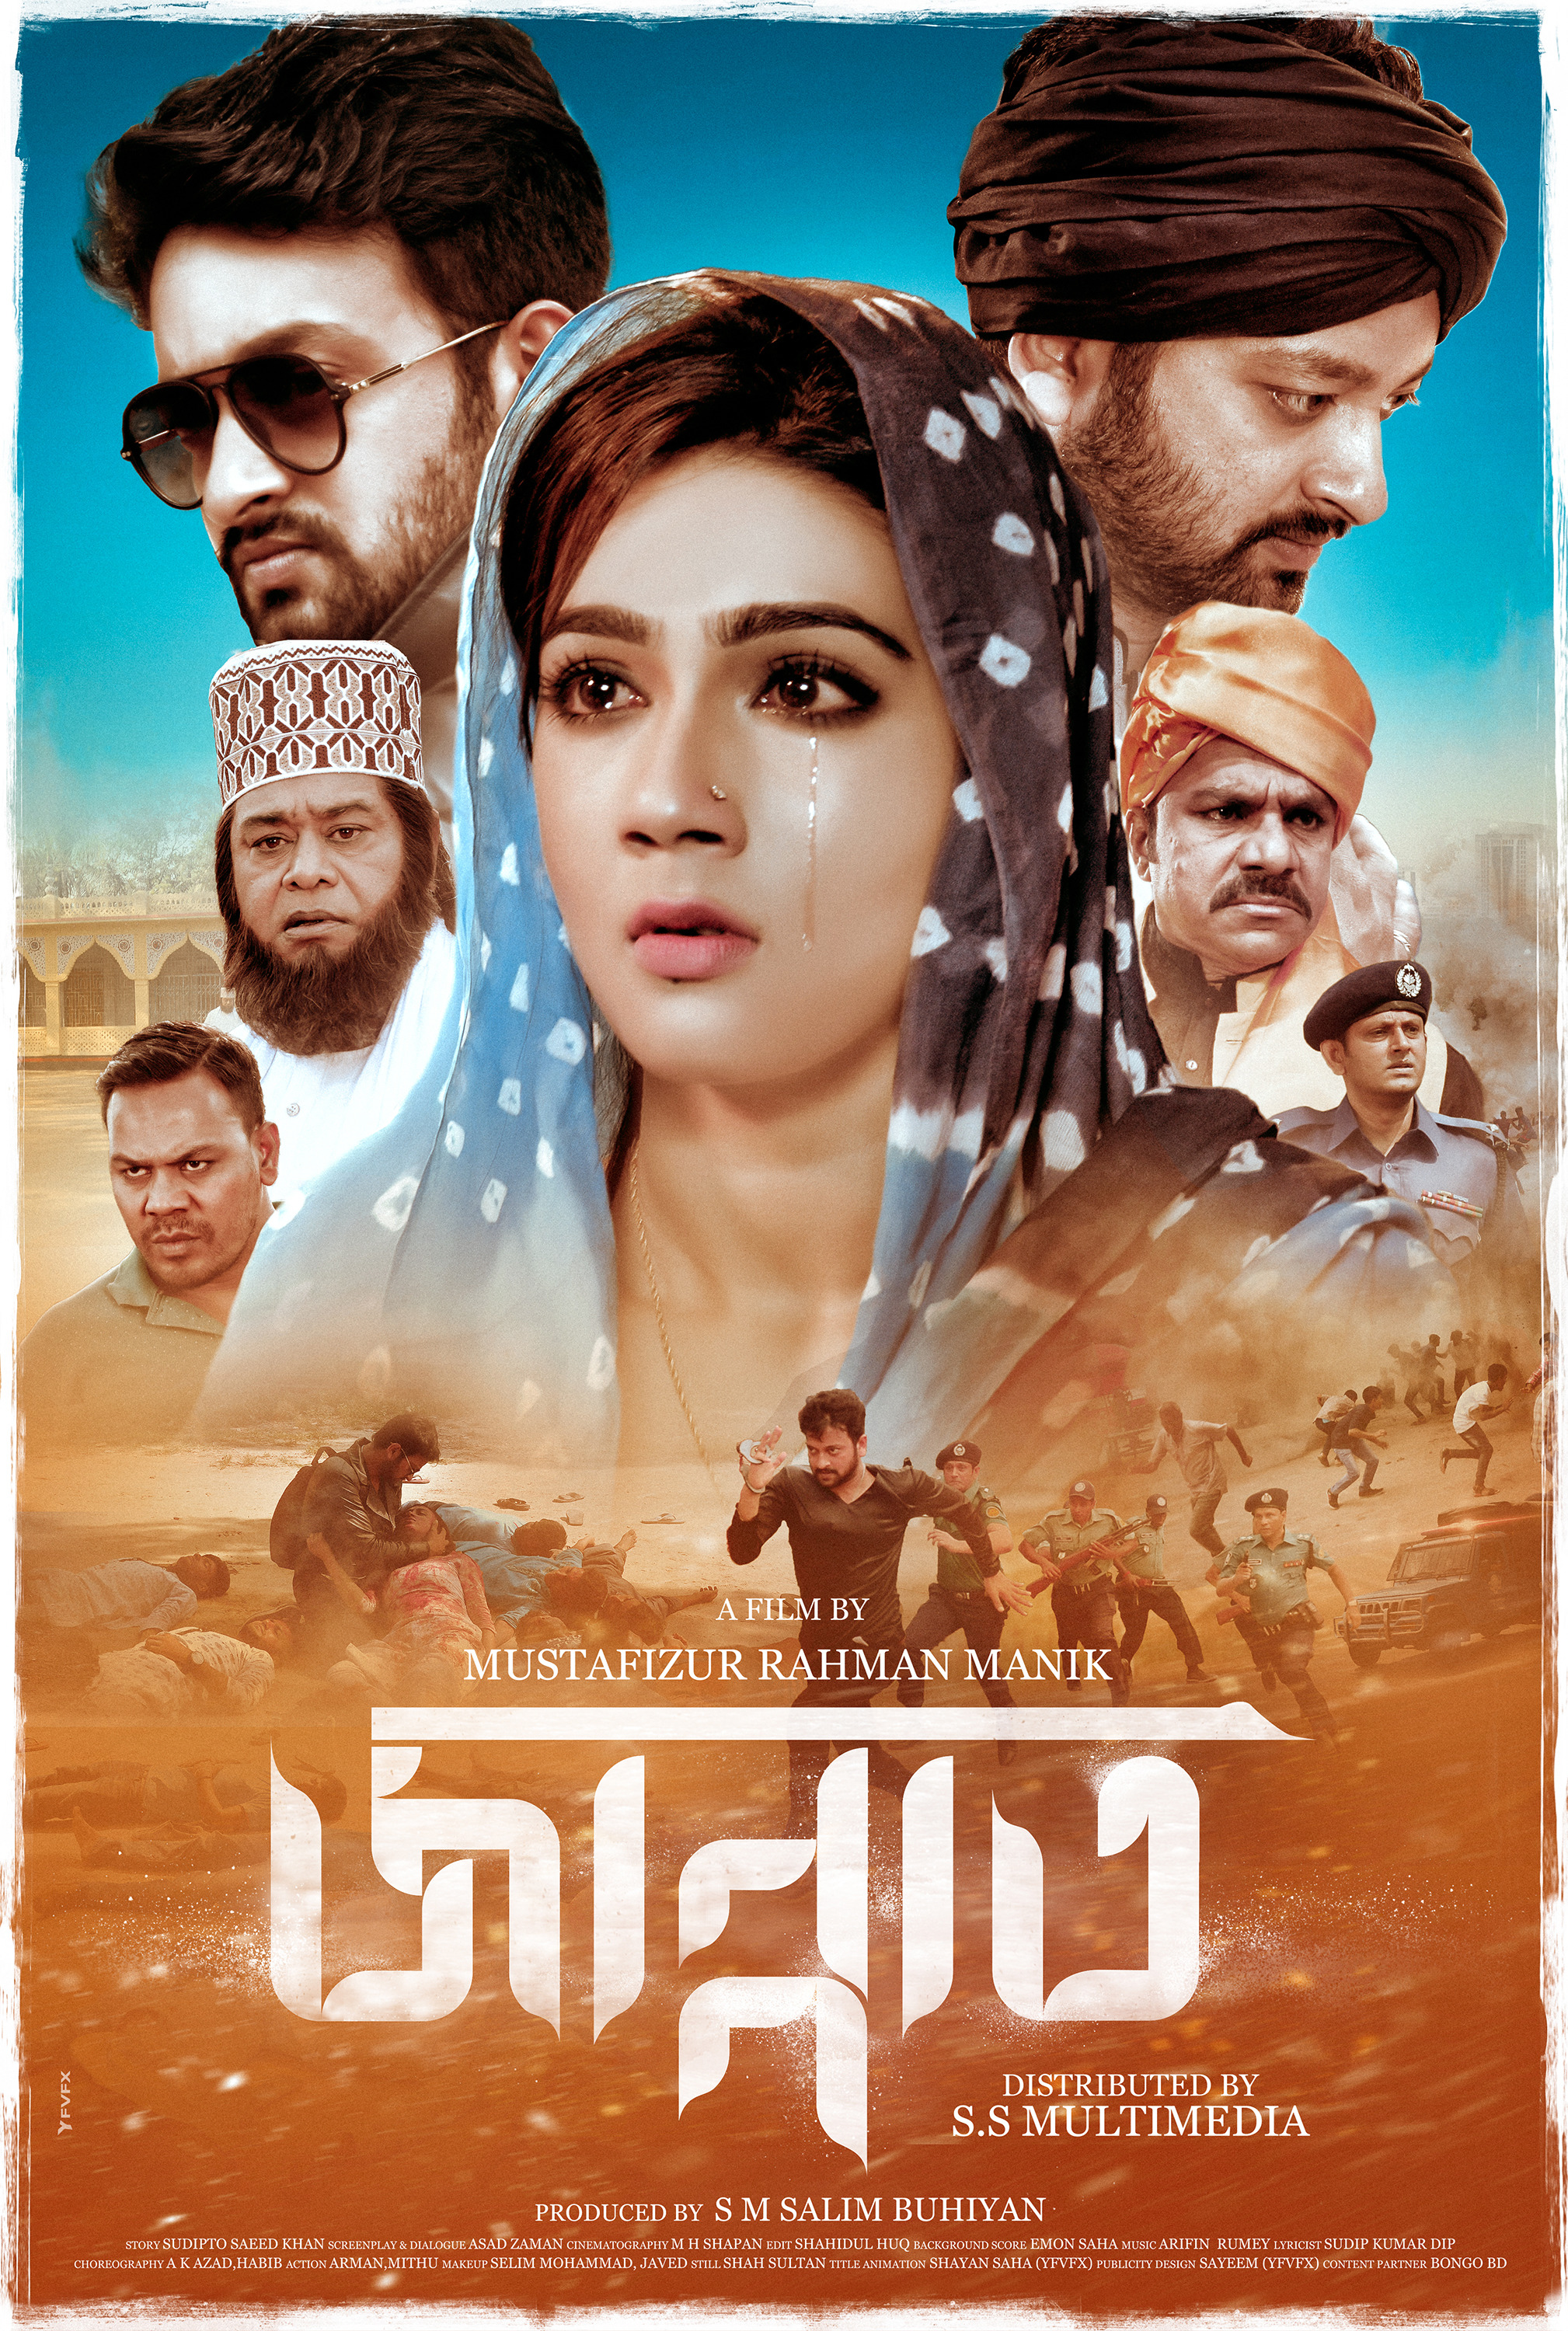 Mega Sized Movie Poster Image for Jannat (#6 of 10)